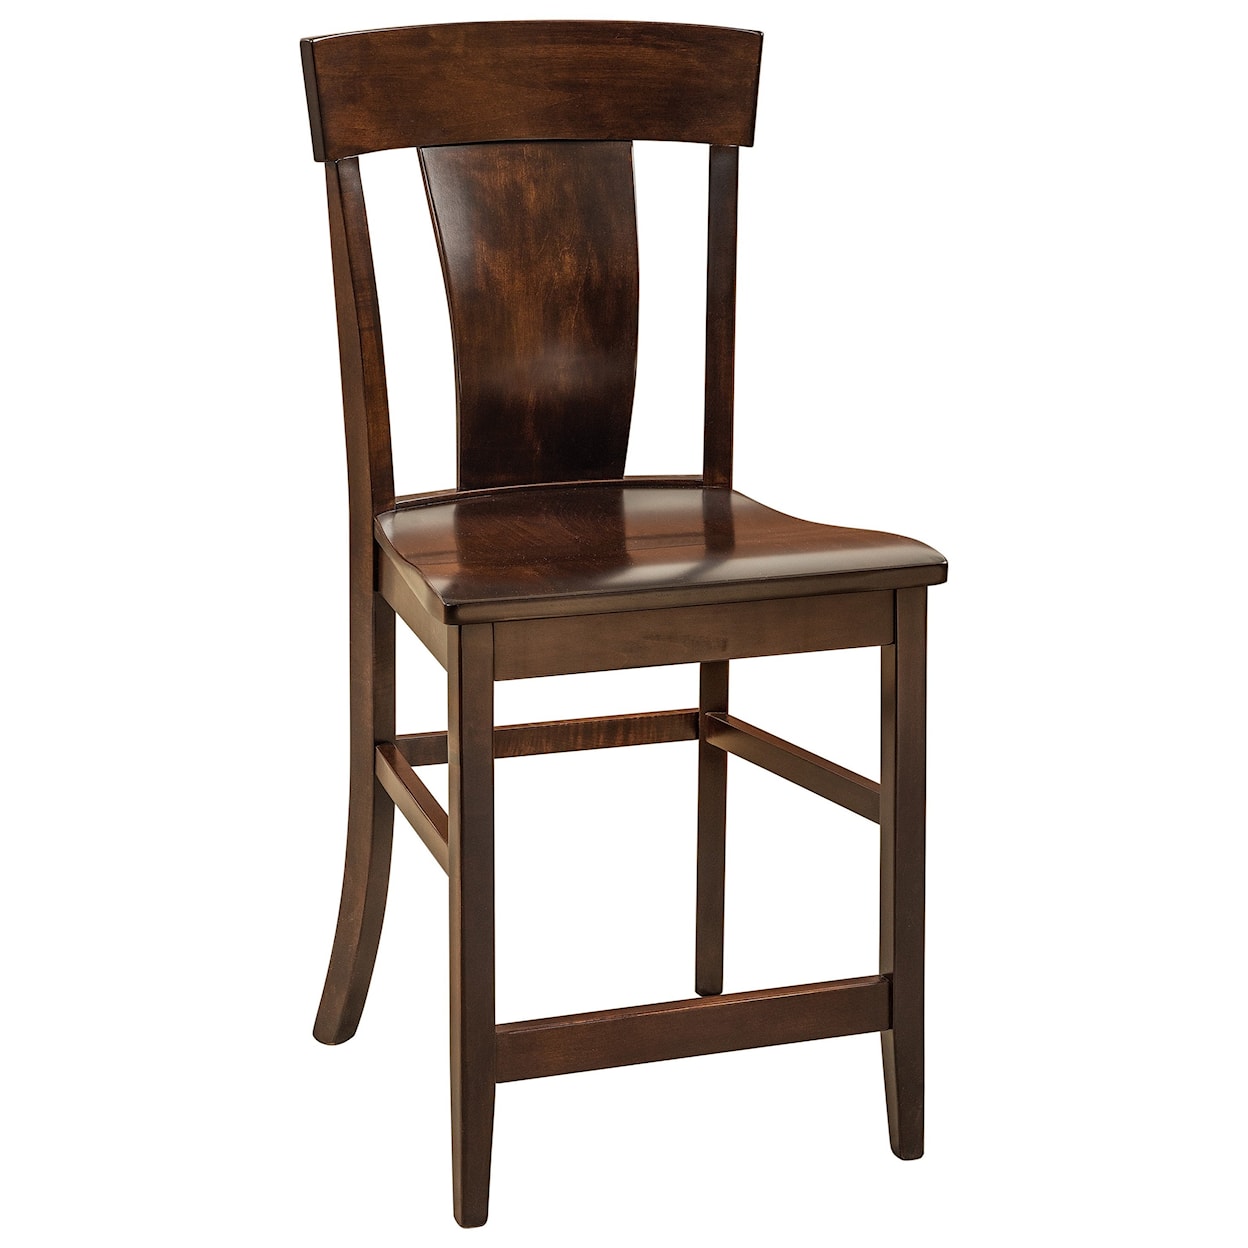 F&N Woodworking Baldwin Stationary Bar Stool - Leather Seat